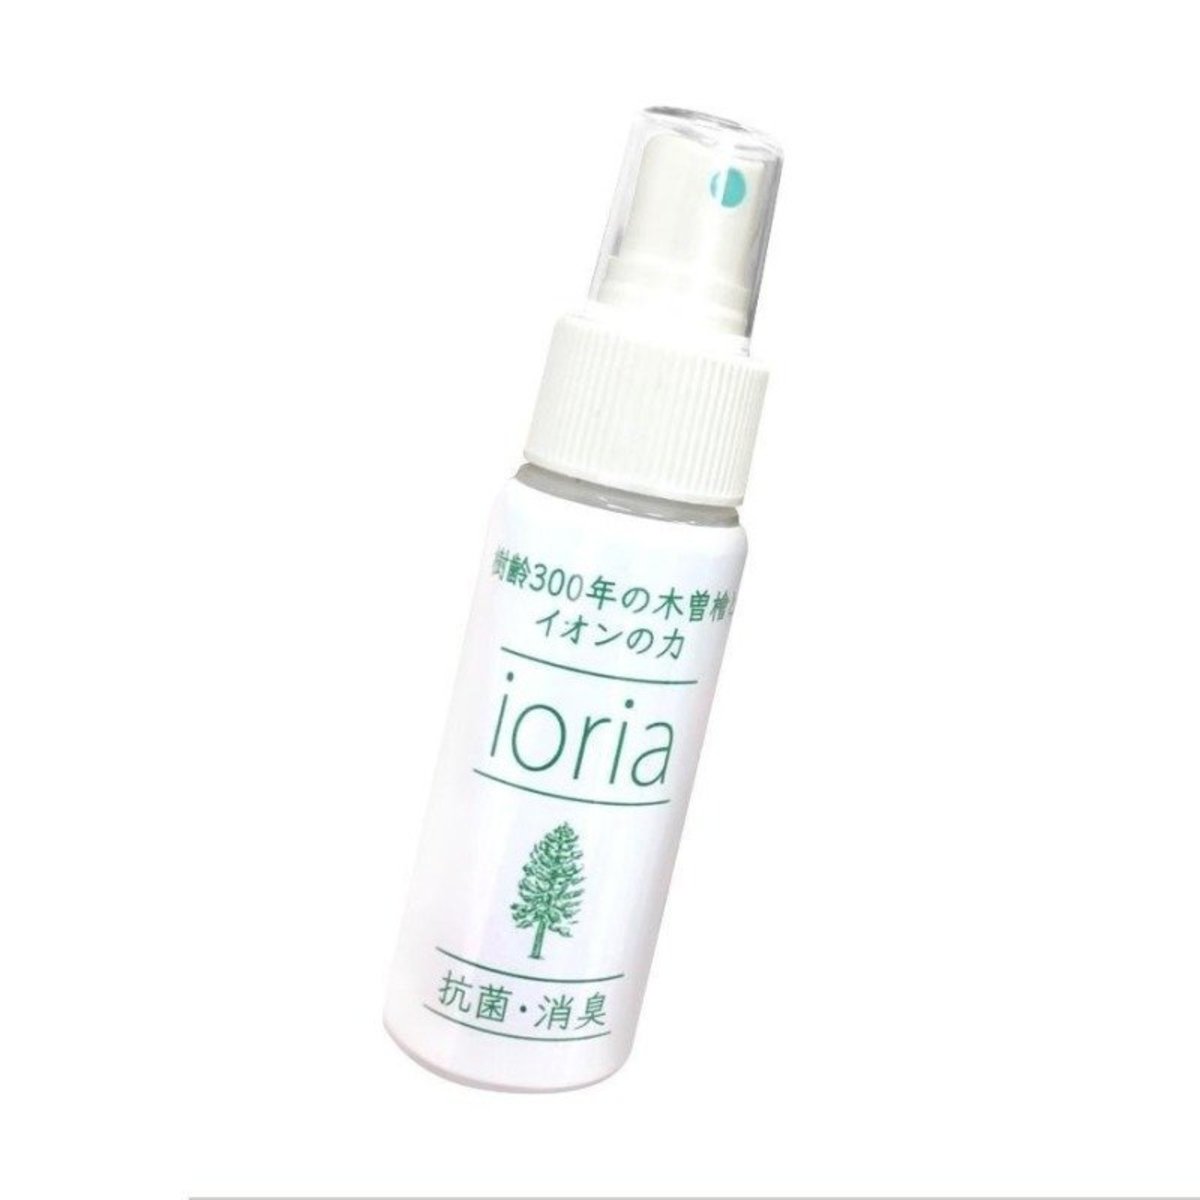 IORIA - 99.9% Antibacterial Odor Eliminator Spray 50ml [Made in Japan]